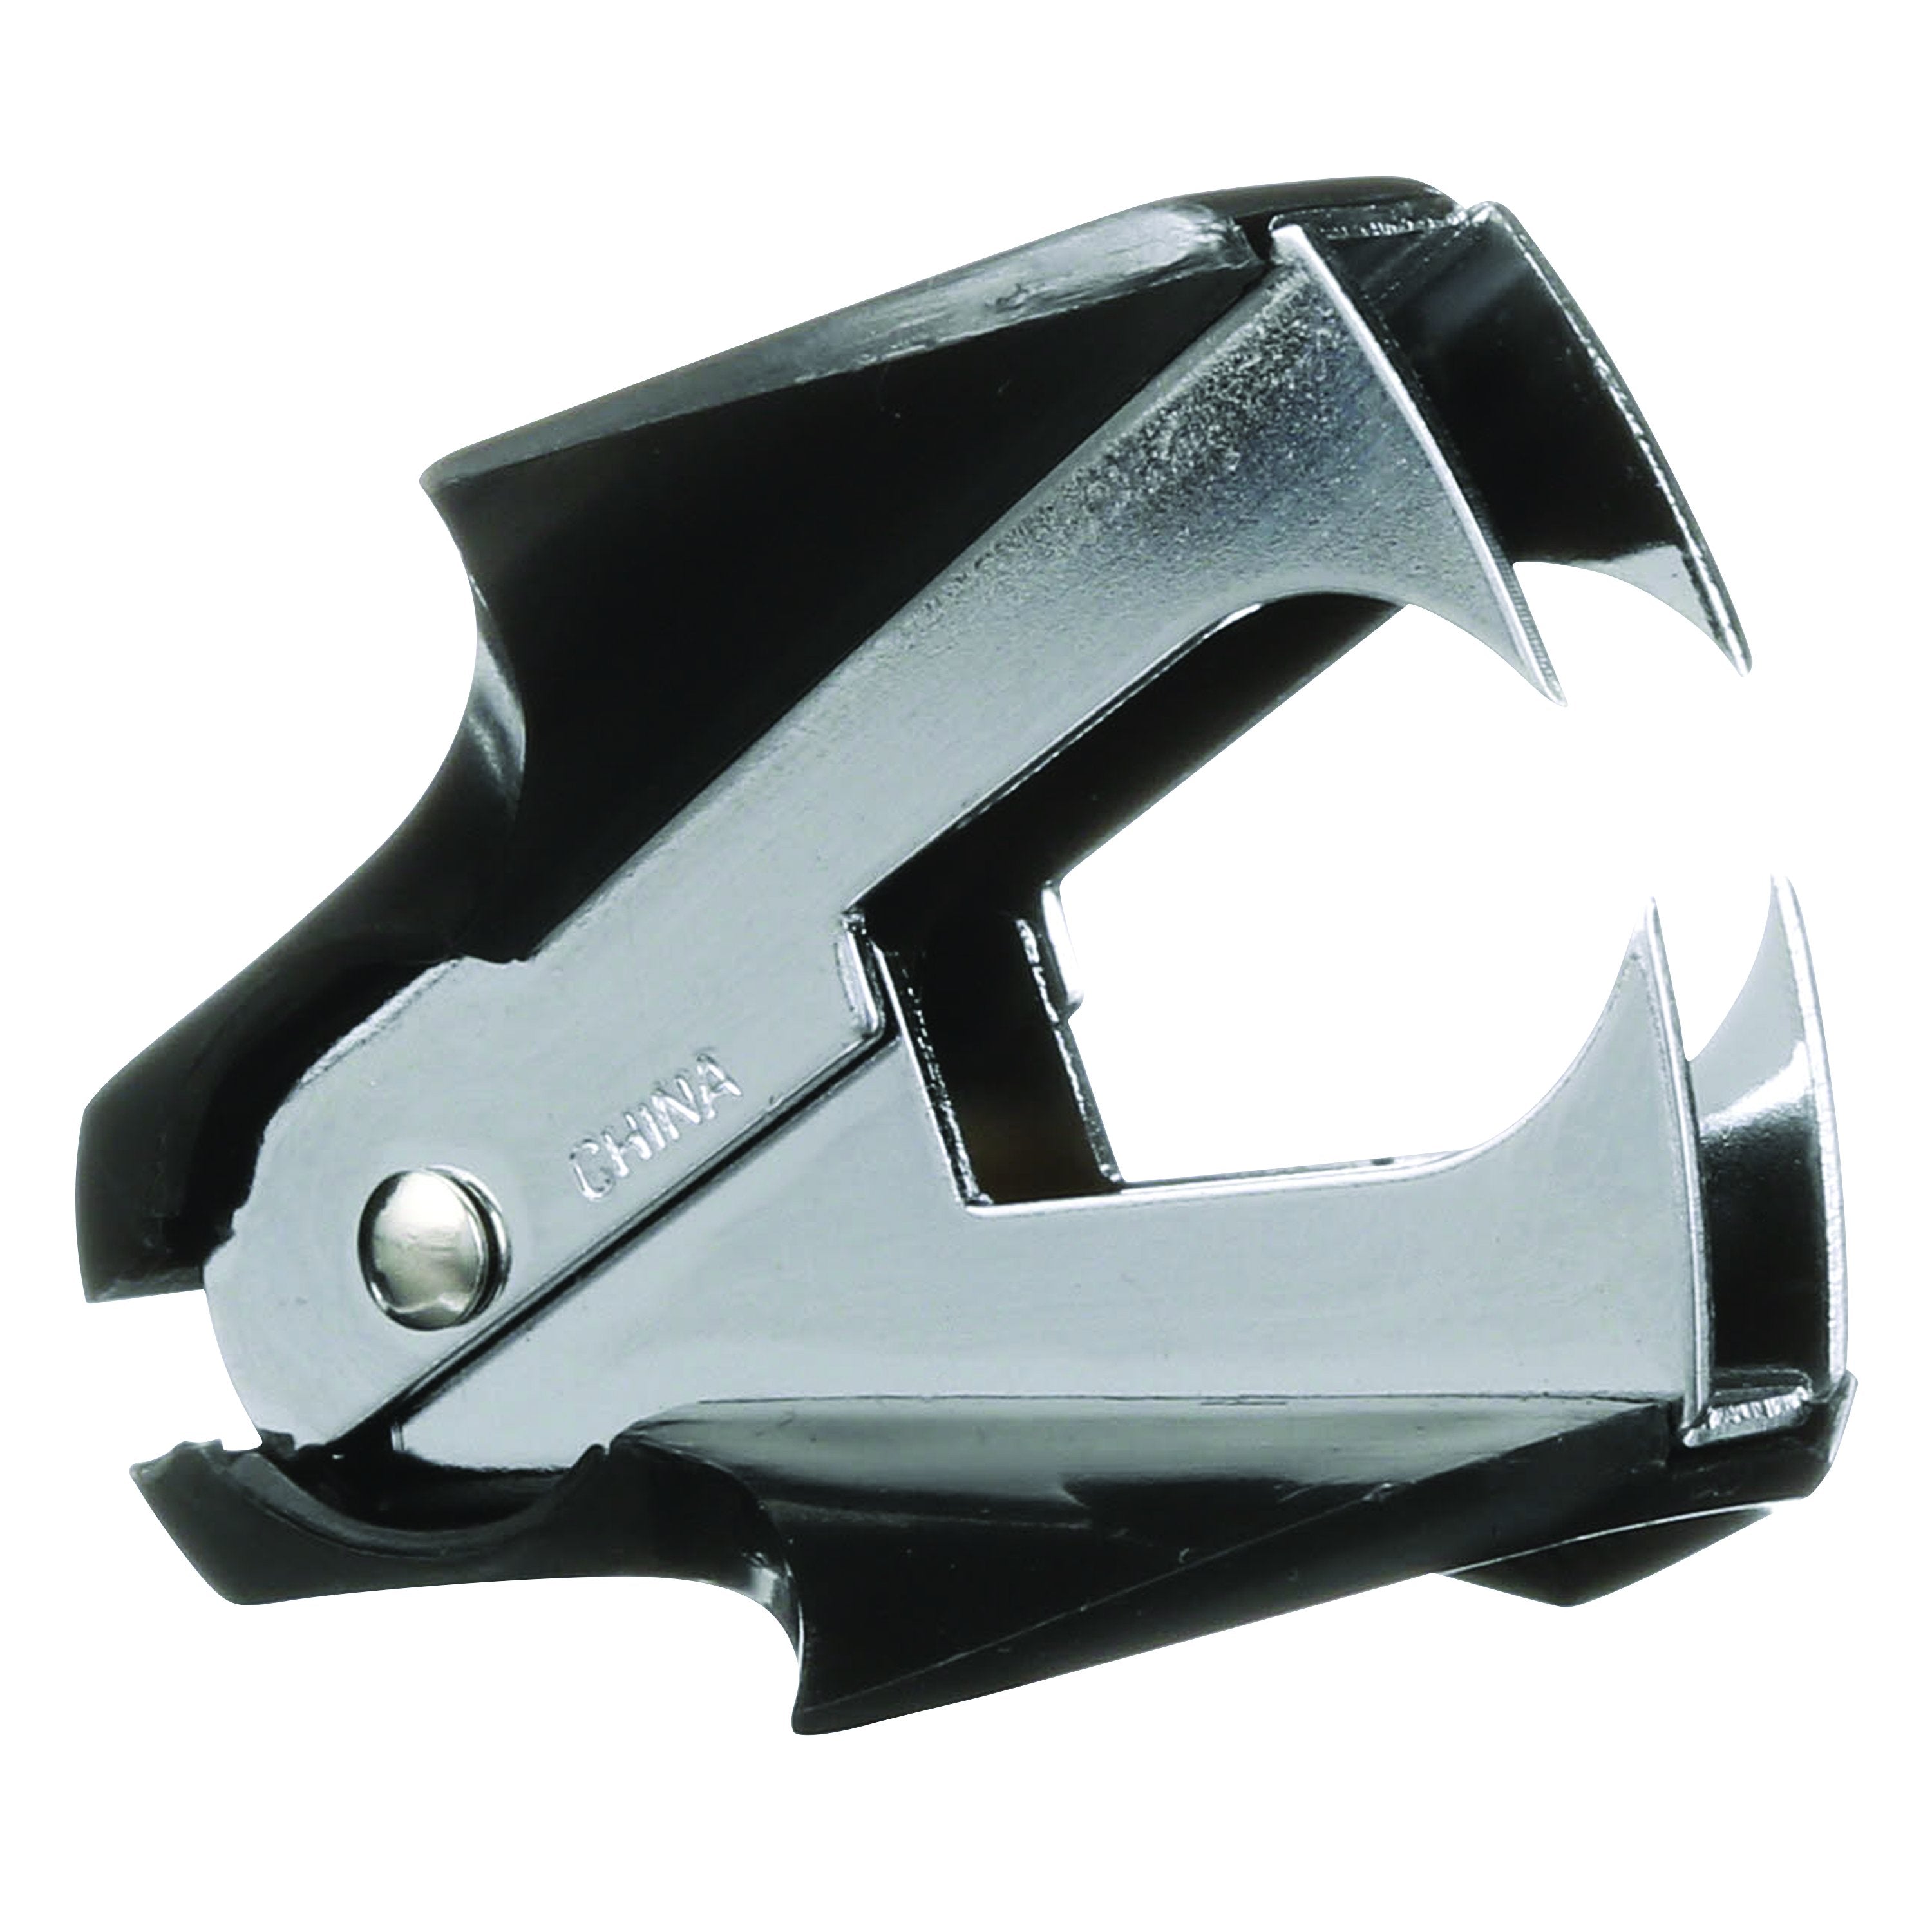 Swingline® Deluxe Staple Remover - Model SRXW-101 - Steel Jaws - Black